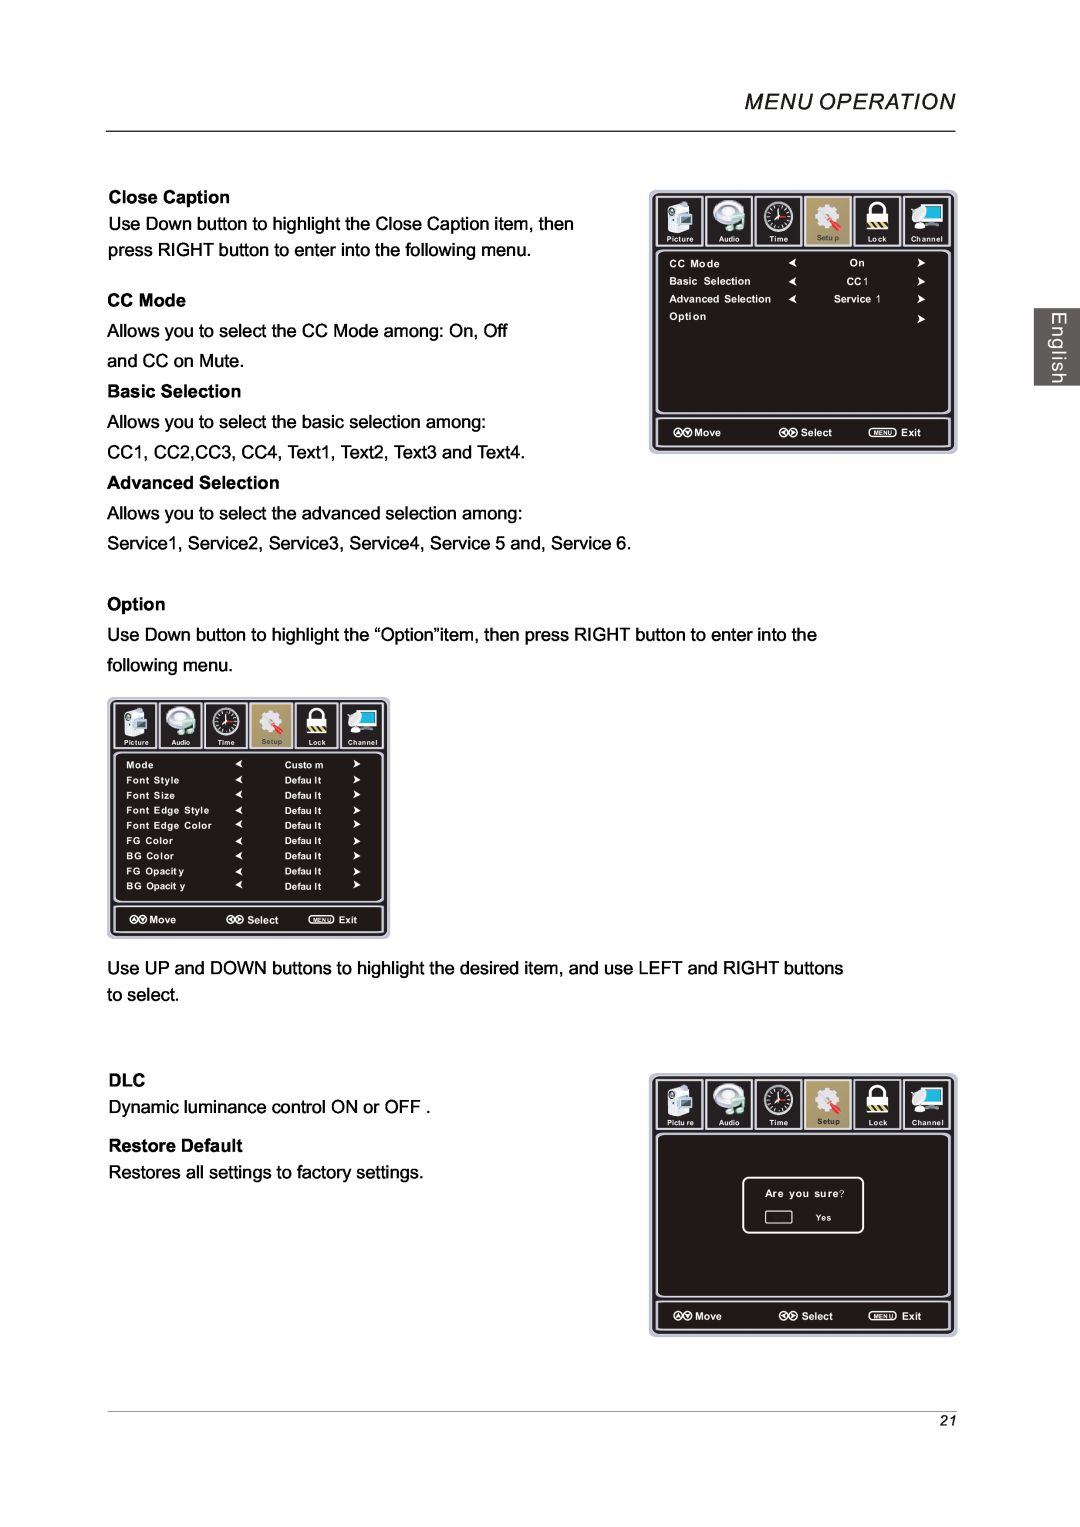 Westinghouse VR-3225 manual Menu Operation, English, Dynamic luminance control ON or OFF, Restore Default 